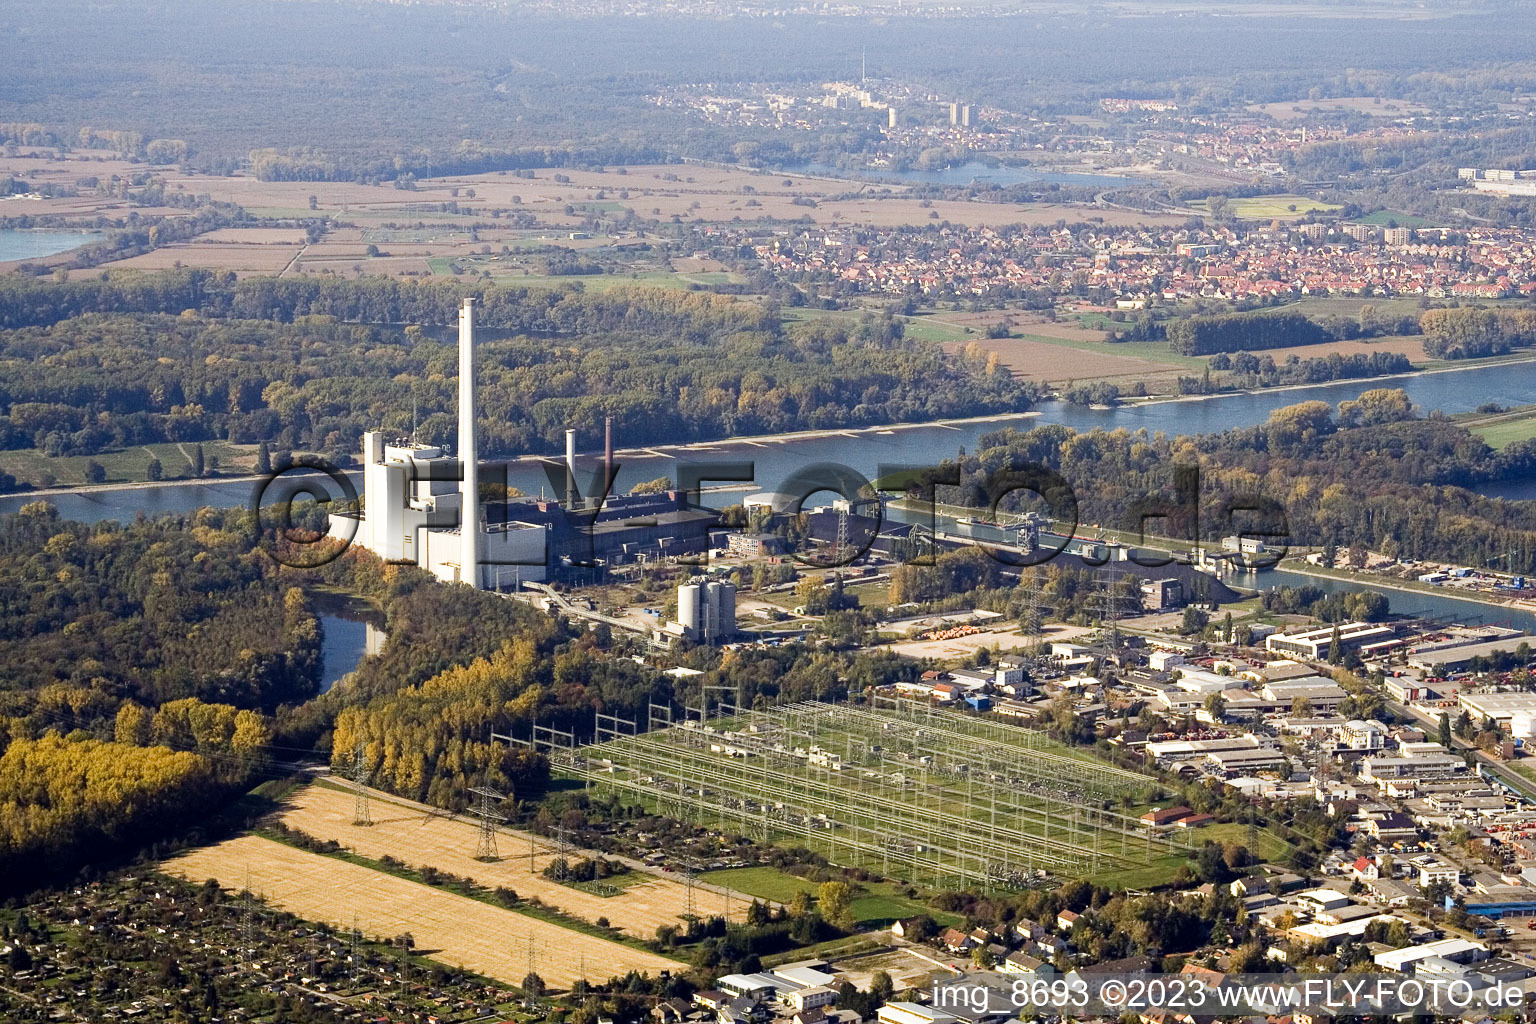 Power plant in the district Rheinhafen in Karlsruhe in the state Baden-Wuerttemberg, Germany